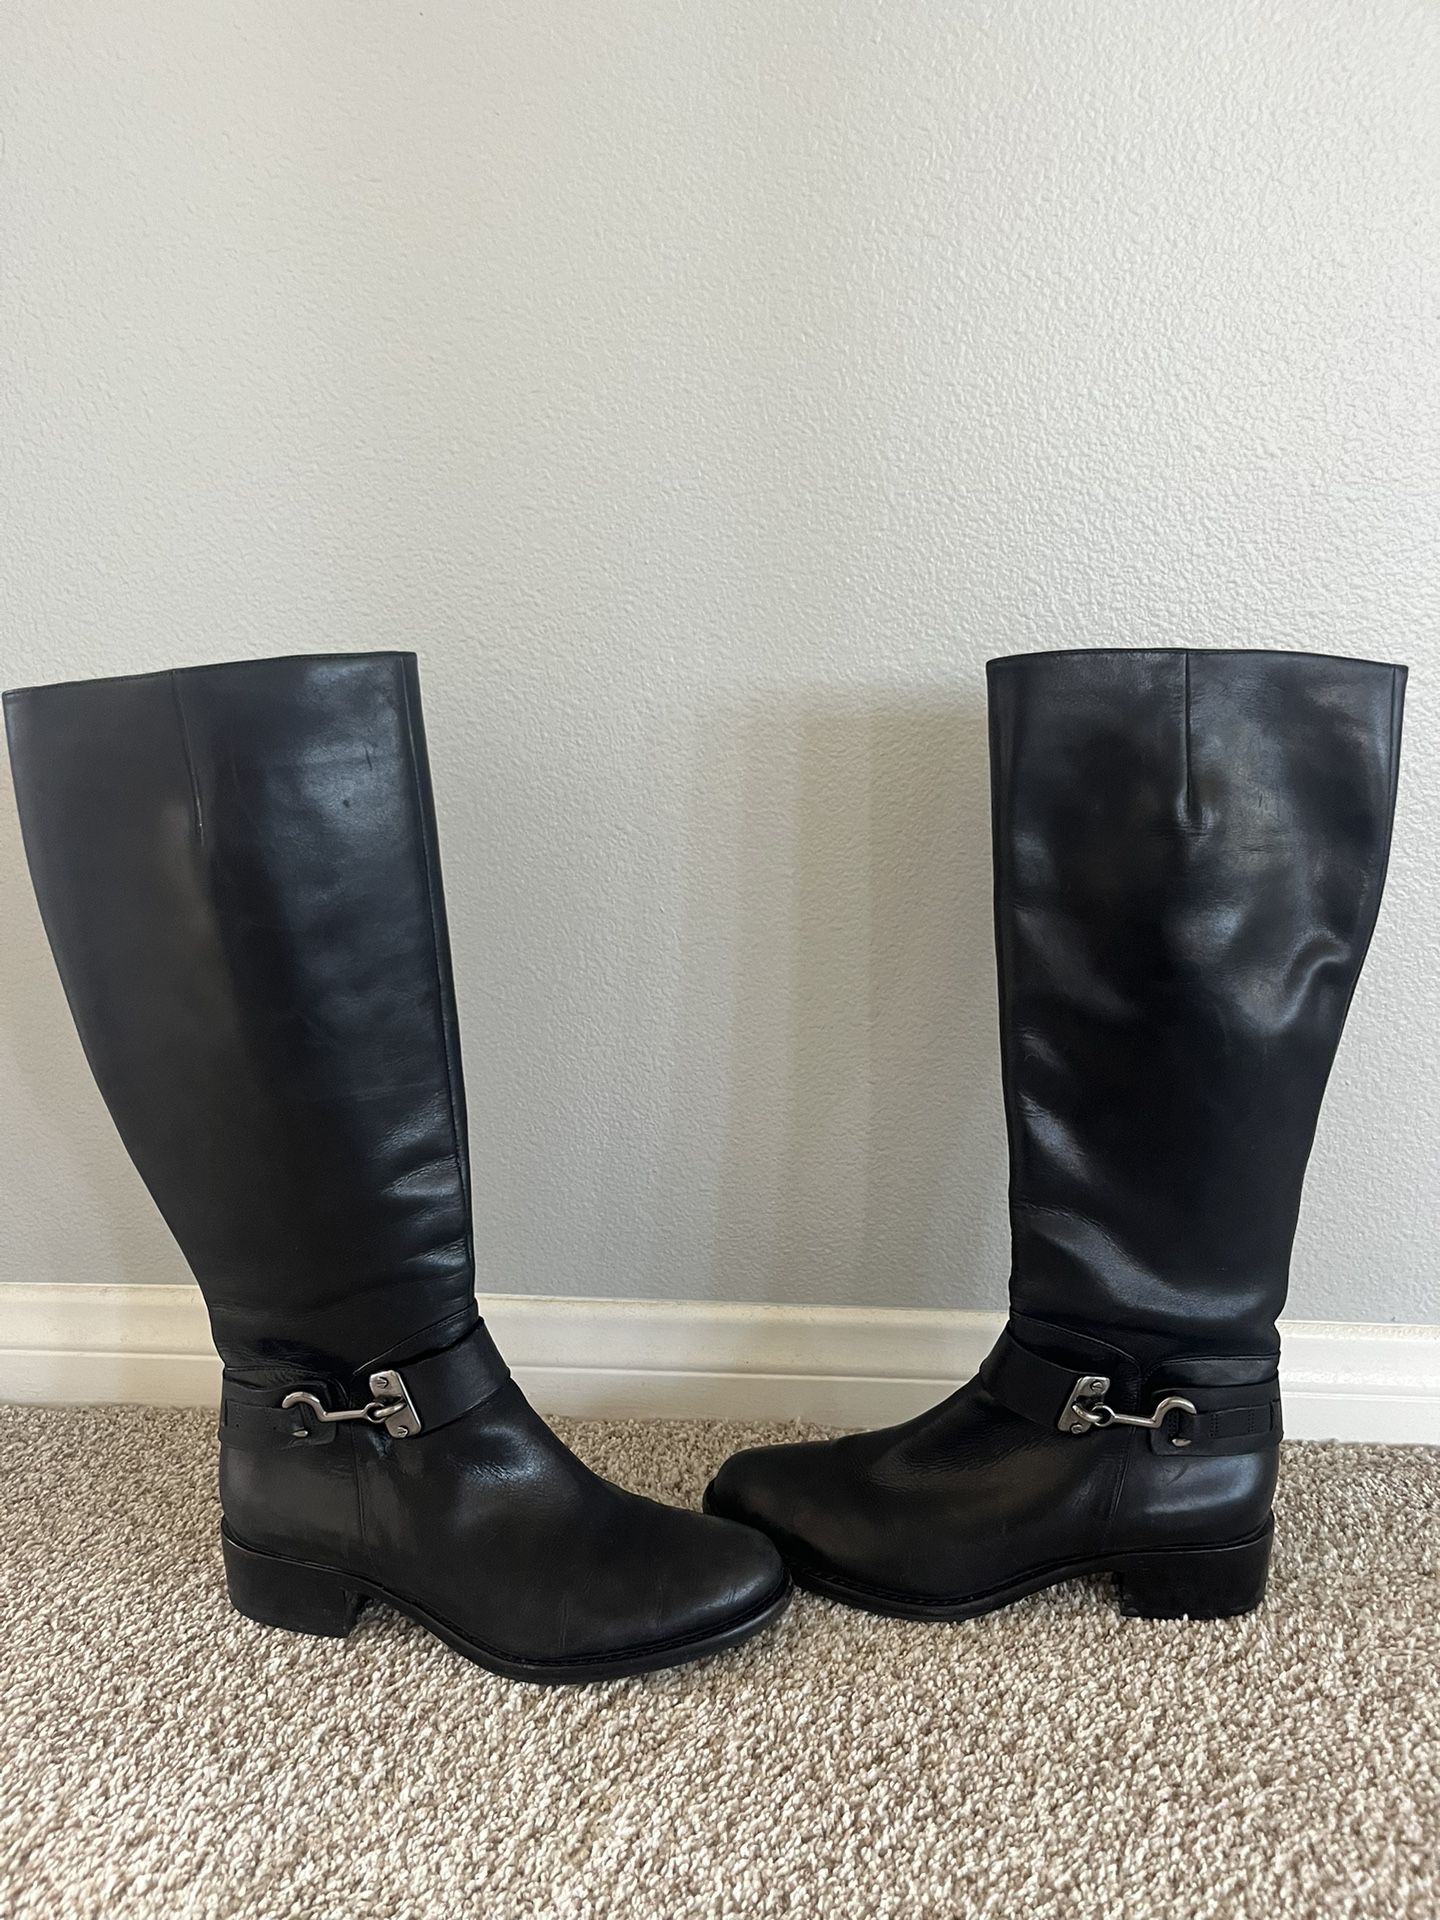 Via Spiga black leather boots size 6